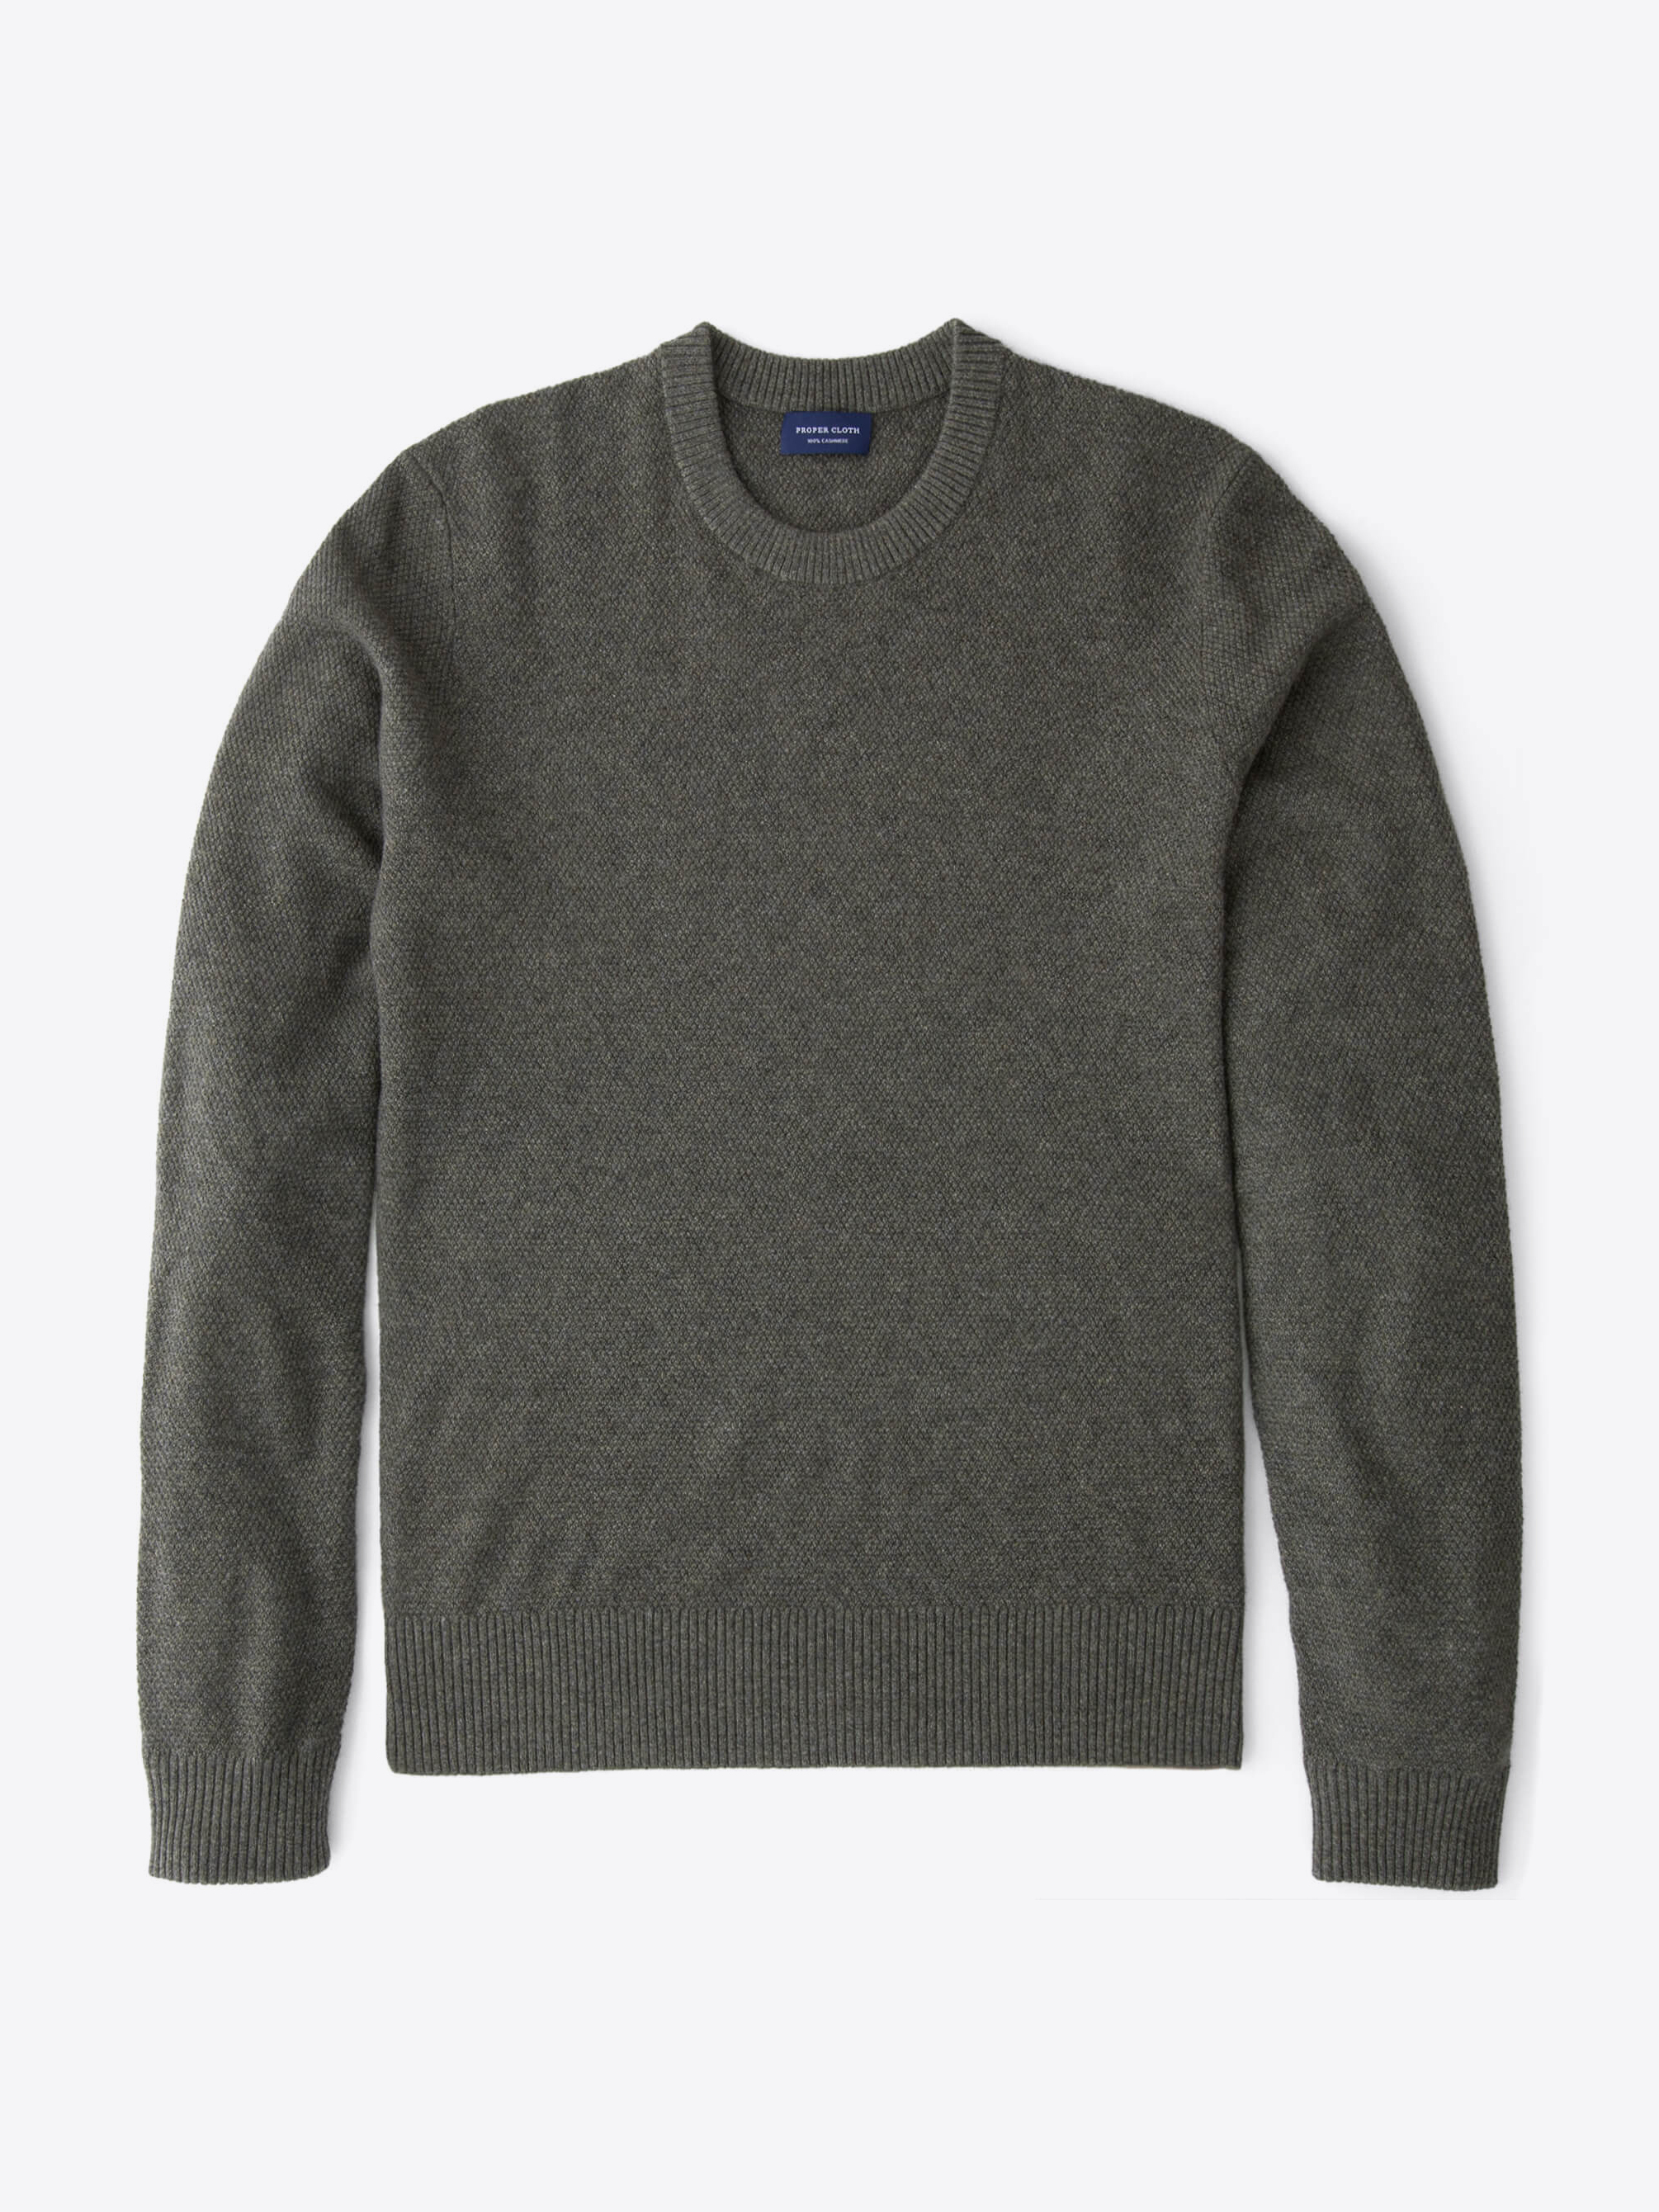 Zoom Image of Pine Cobble Stitch Cashmere Crewneck Sweater